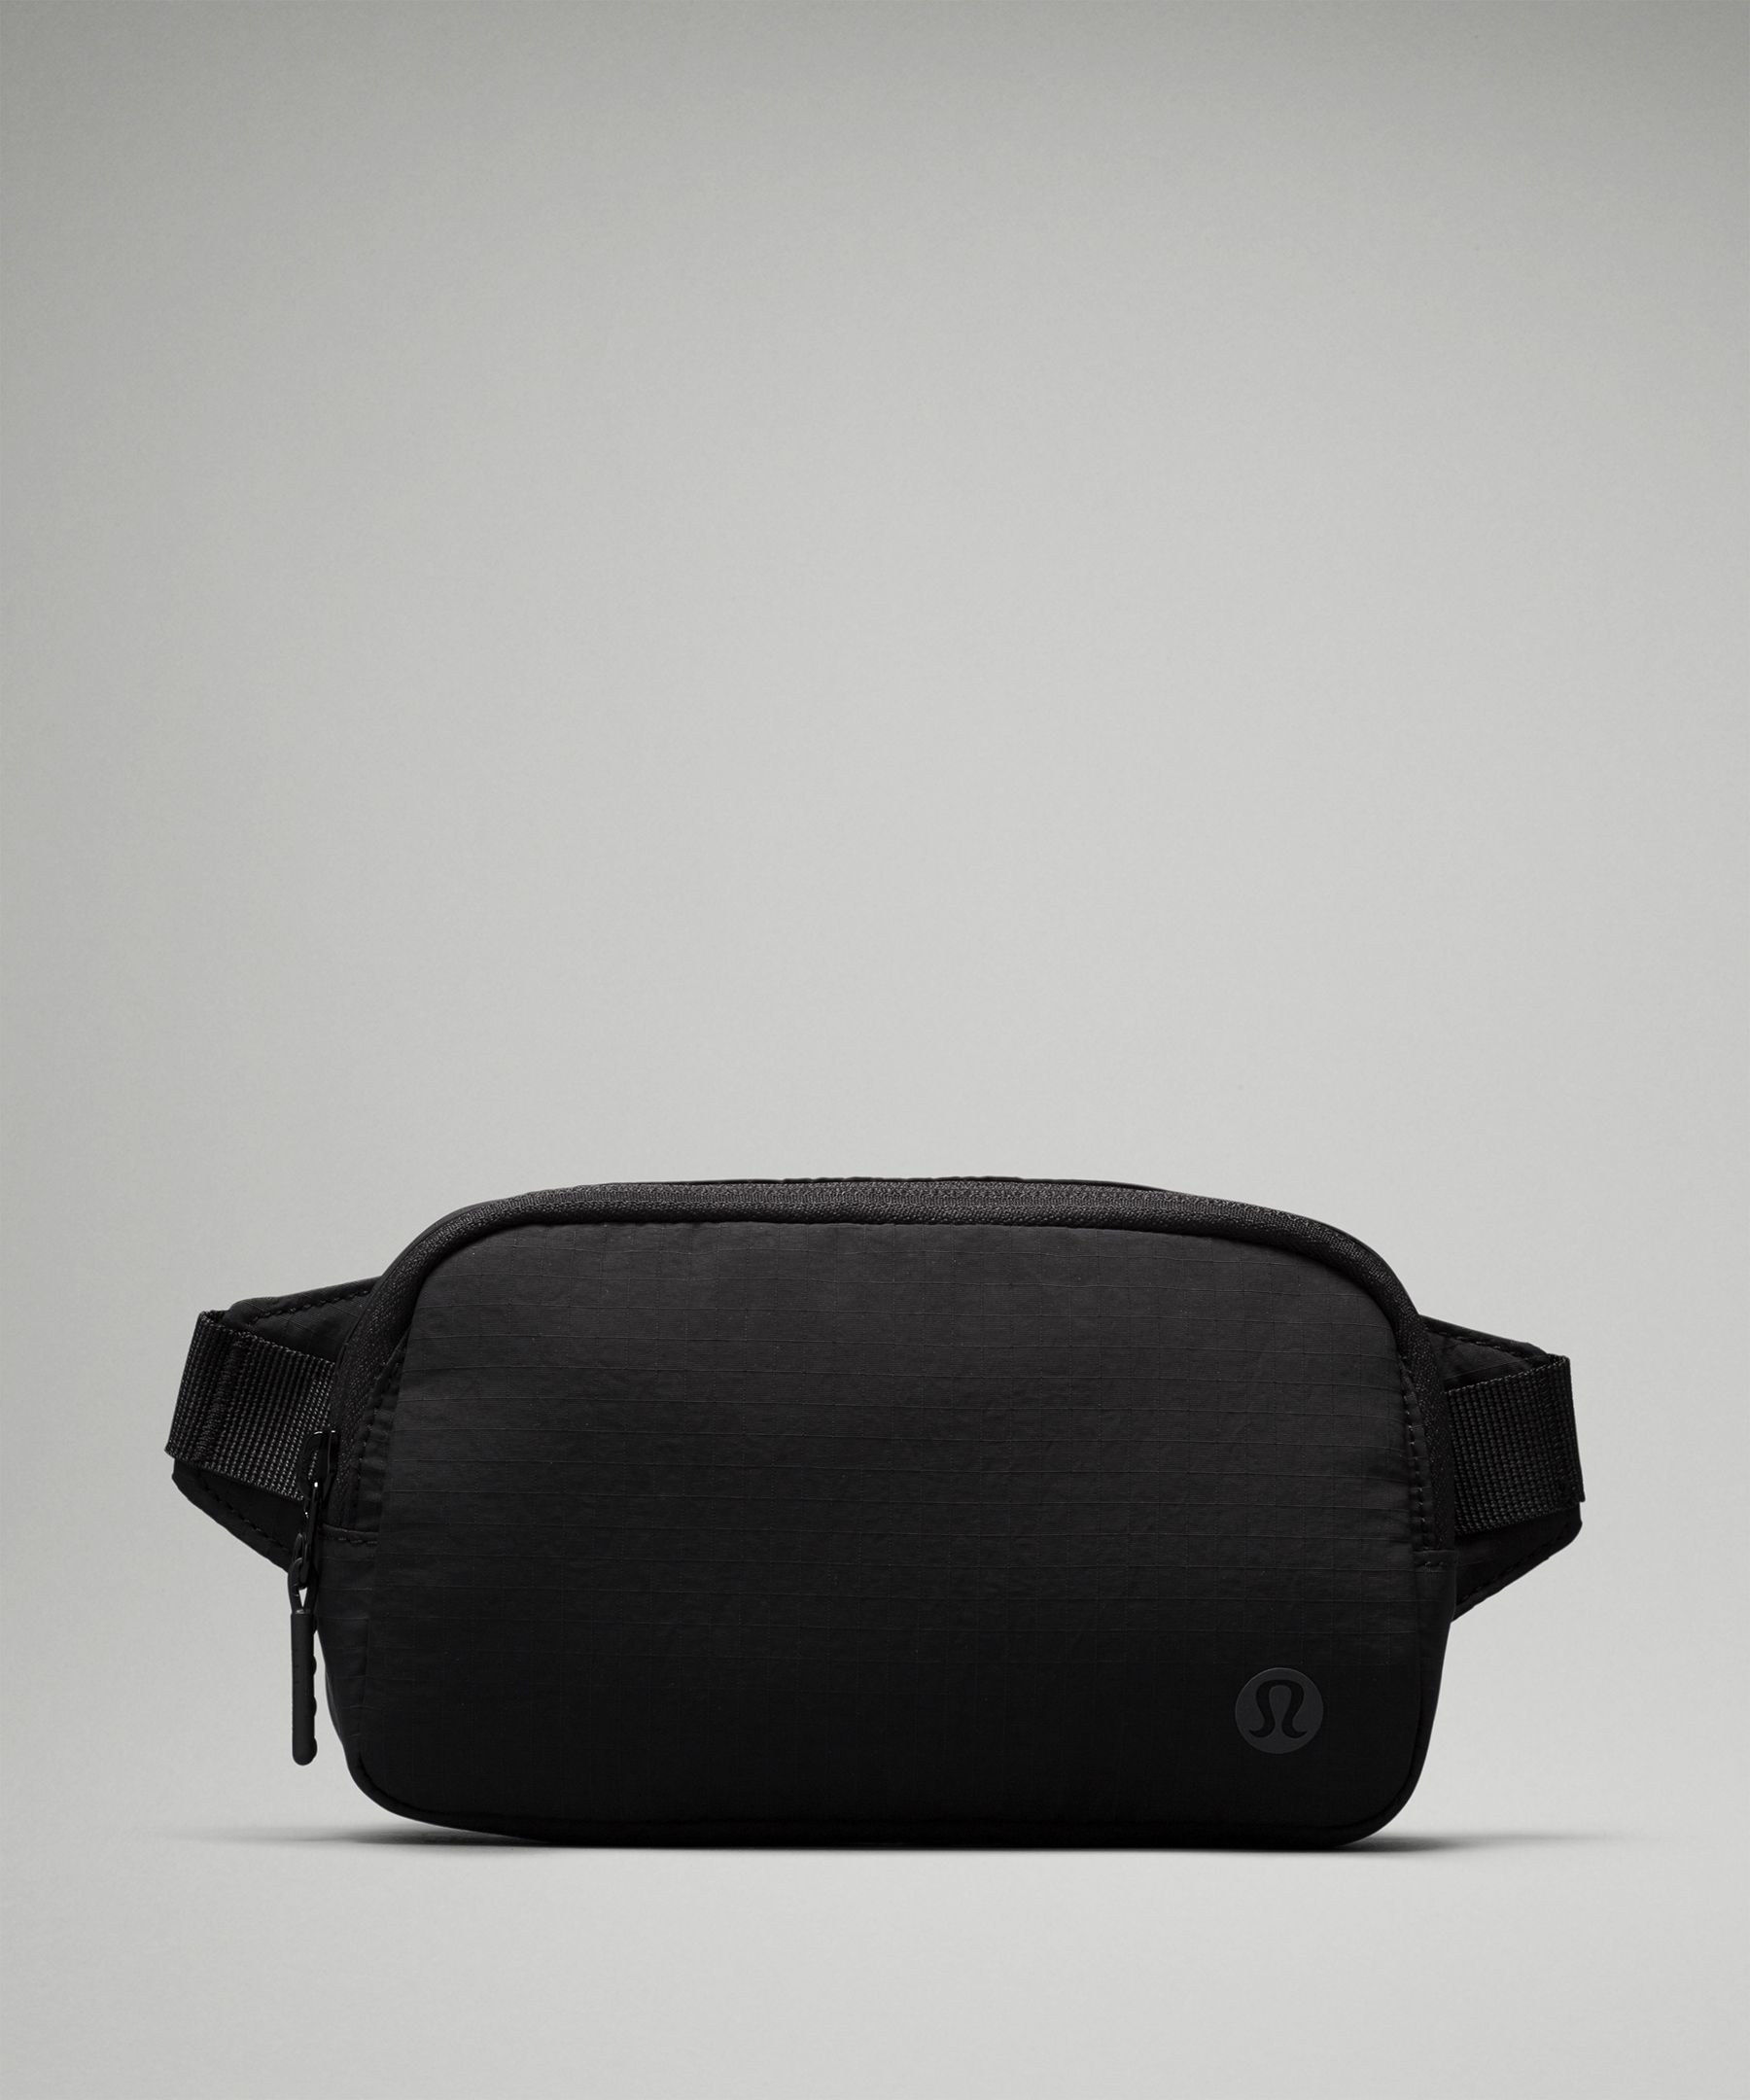 Brand New LULULemon Belt Bag - clothing & accessories - by owner - apparel  sale - craigslist